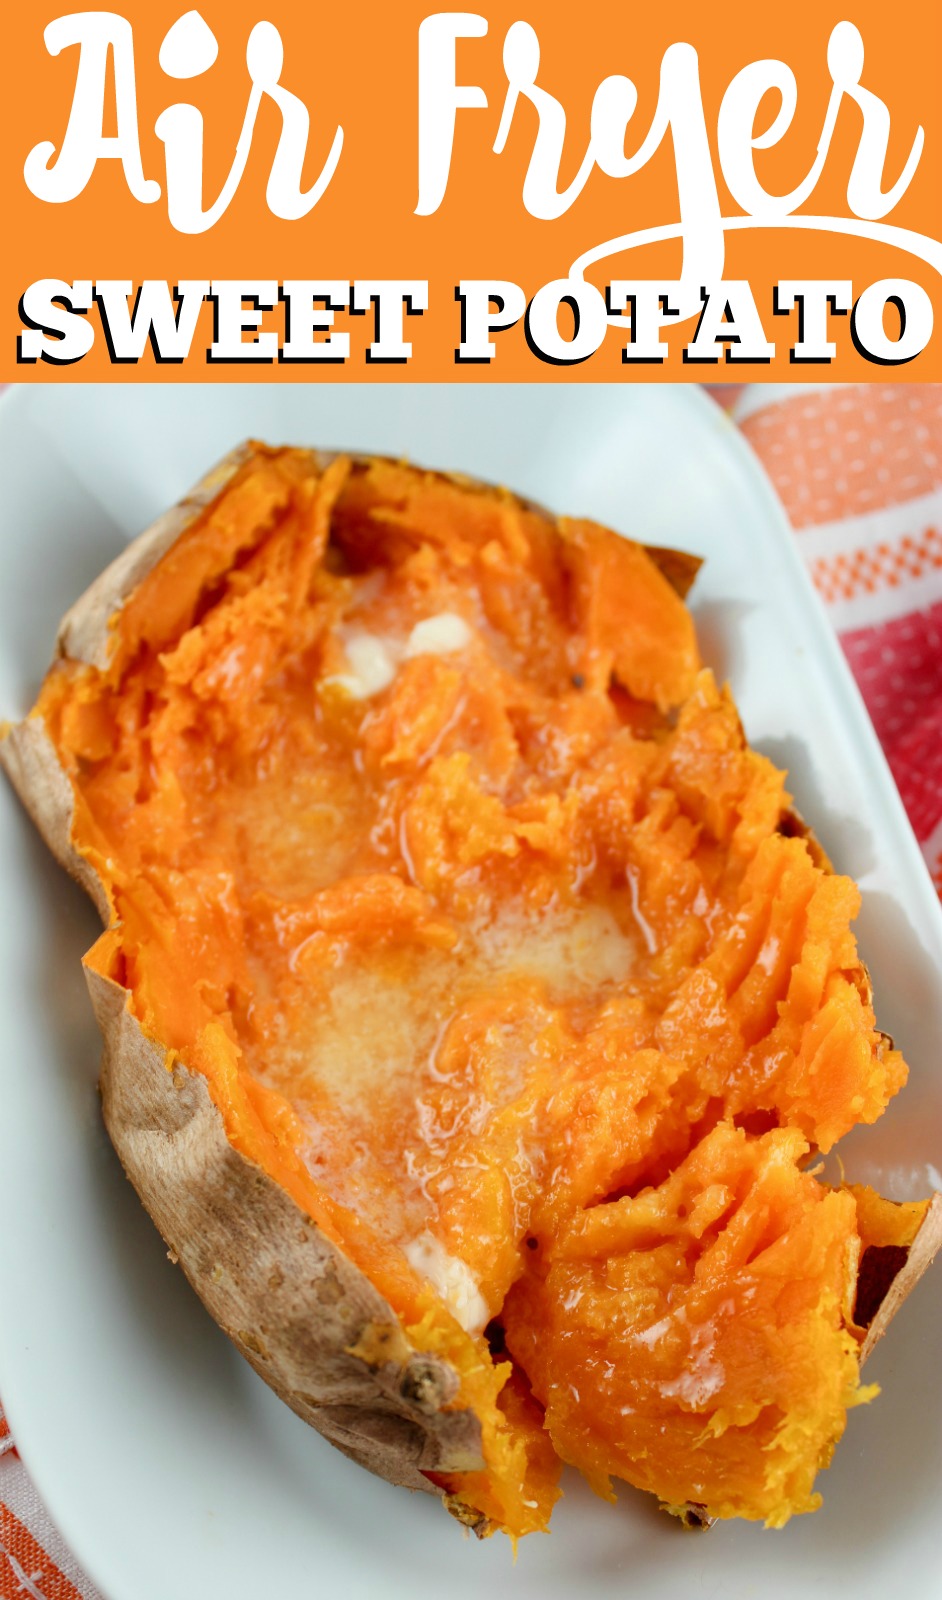 Air Fryer Sweet Potato - The Food Hussy